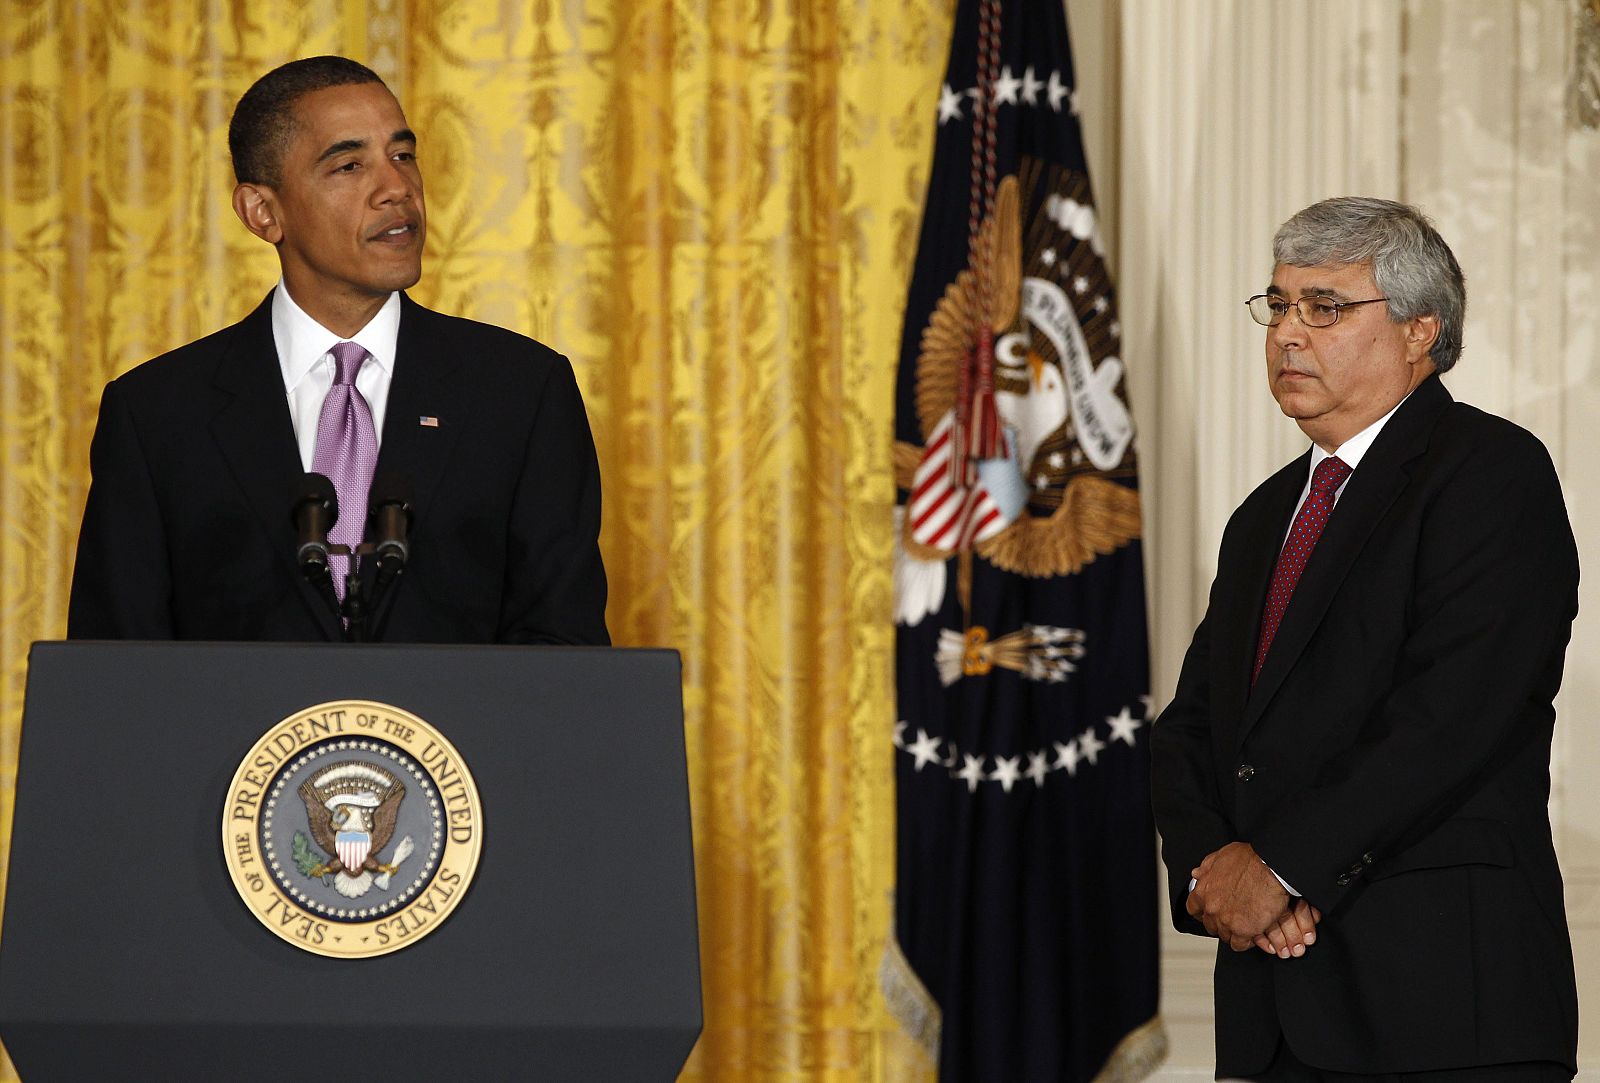 U.S. President Obama announces Rouse as his interim White House Chief of Staff in Washington